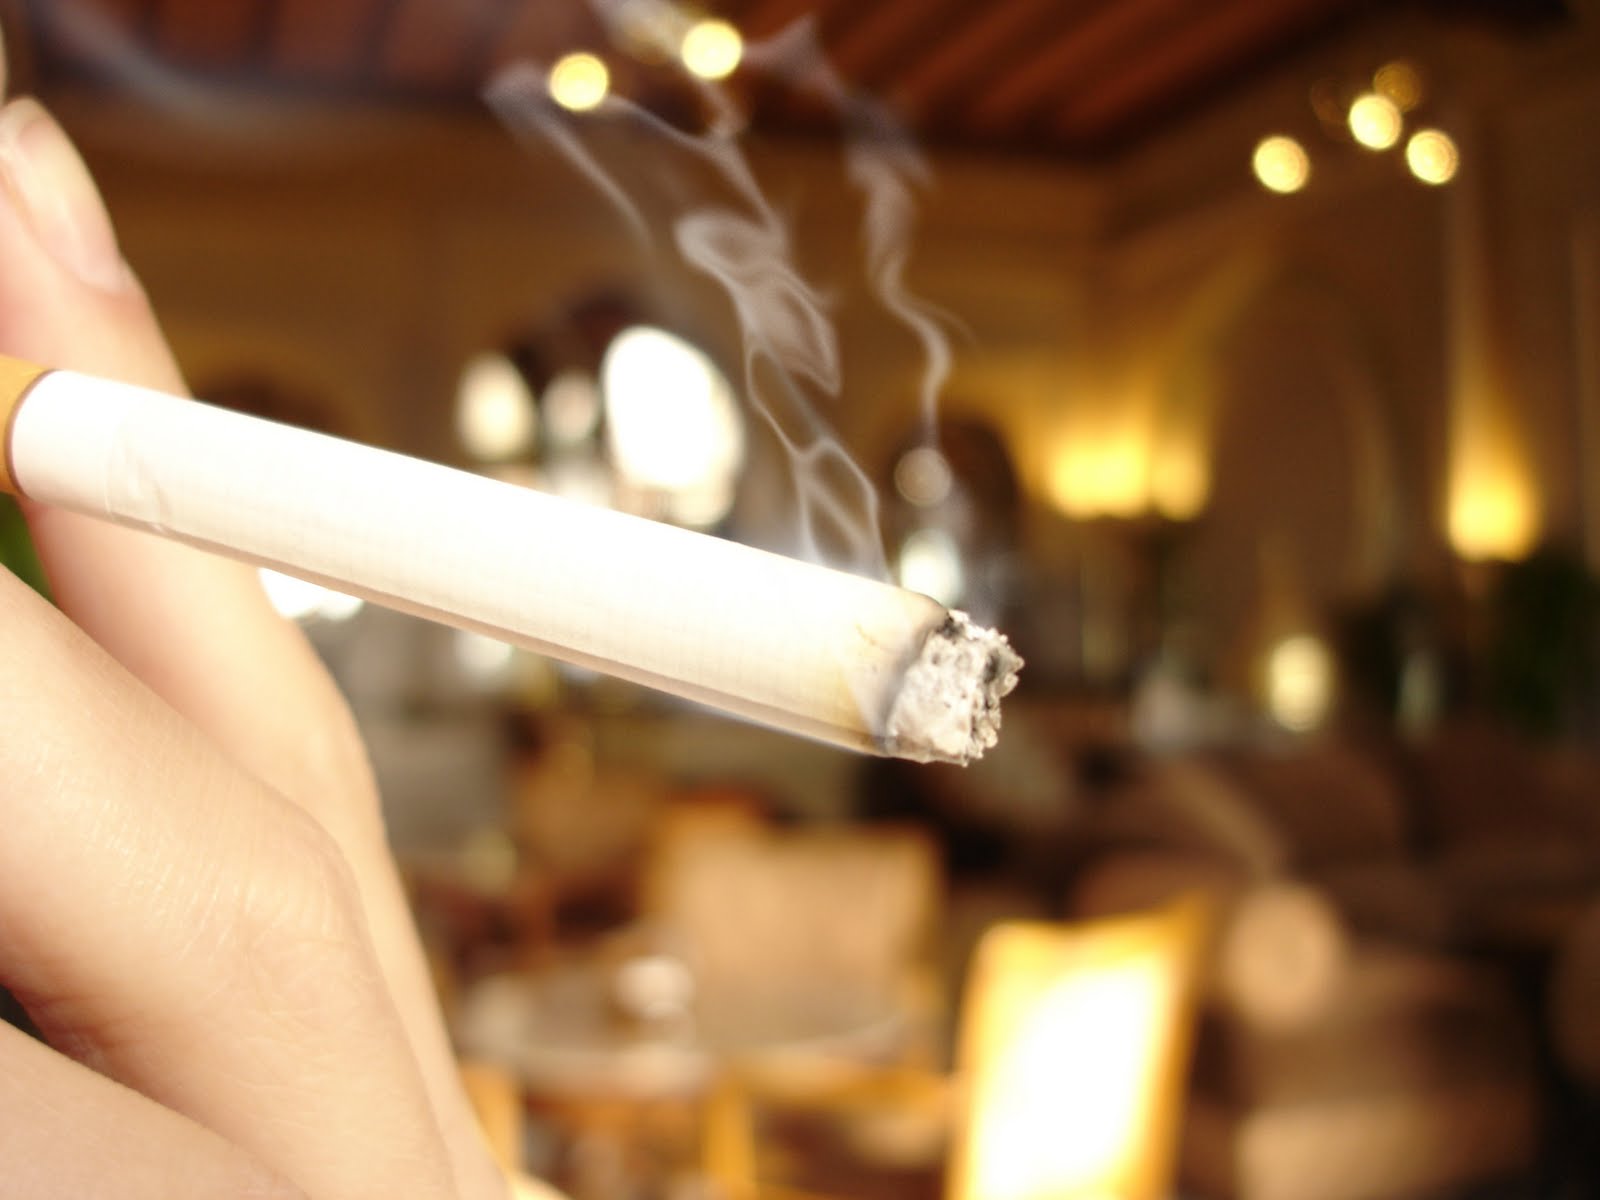 Saúde: Joinville oferece tratamento contra o tabaco em 42 unidades de saúde, confira!